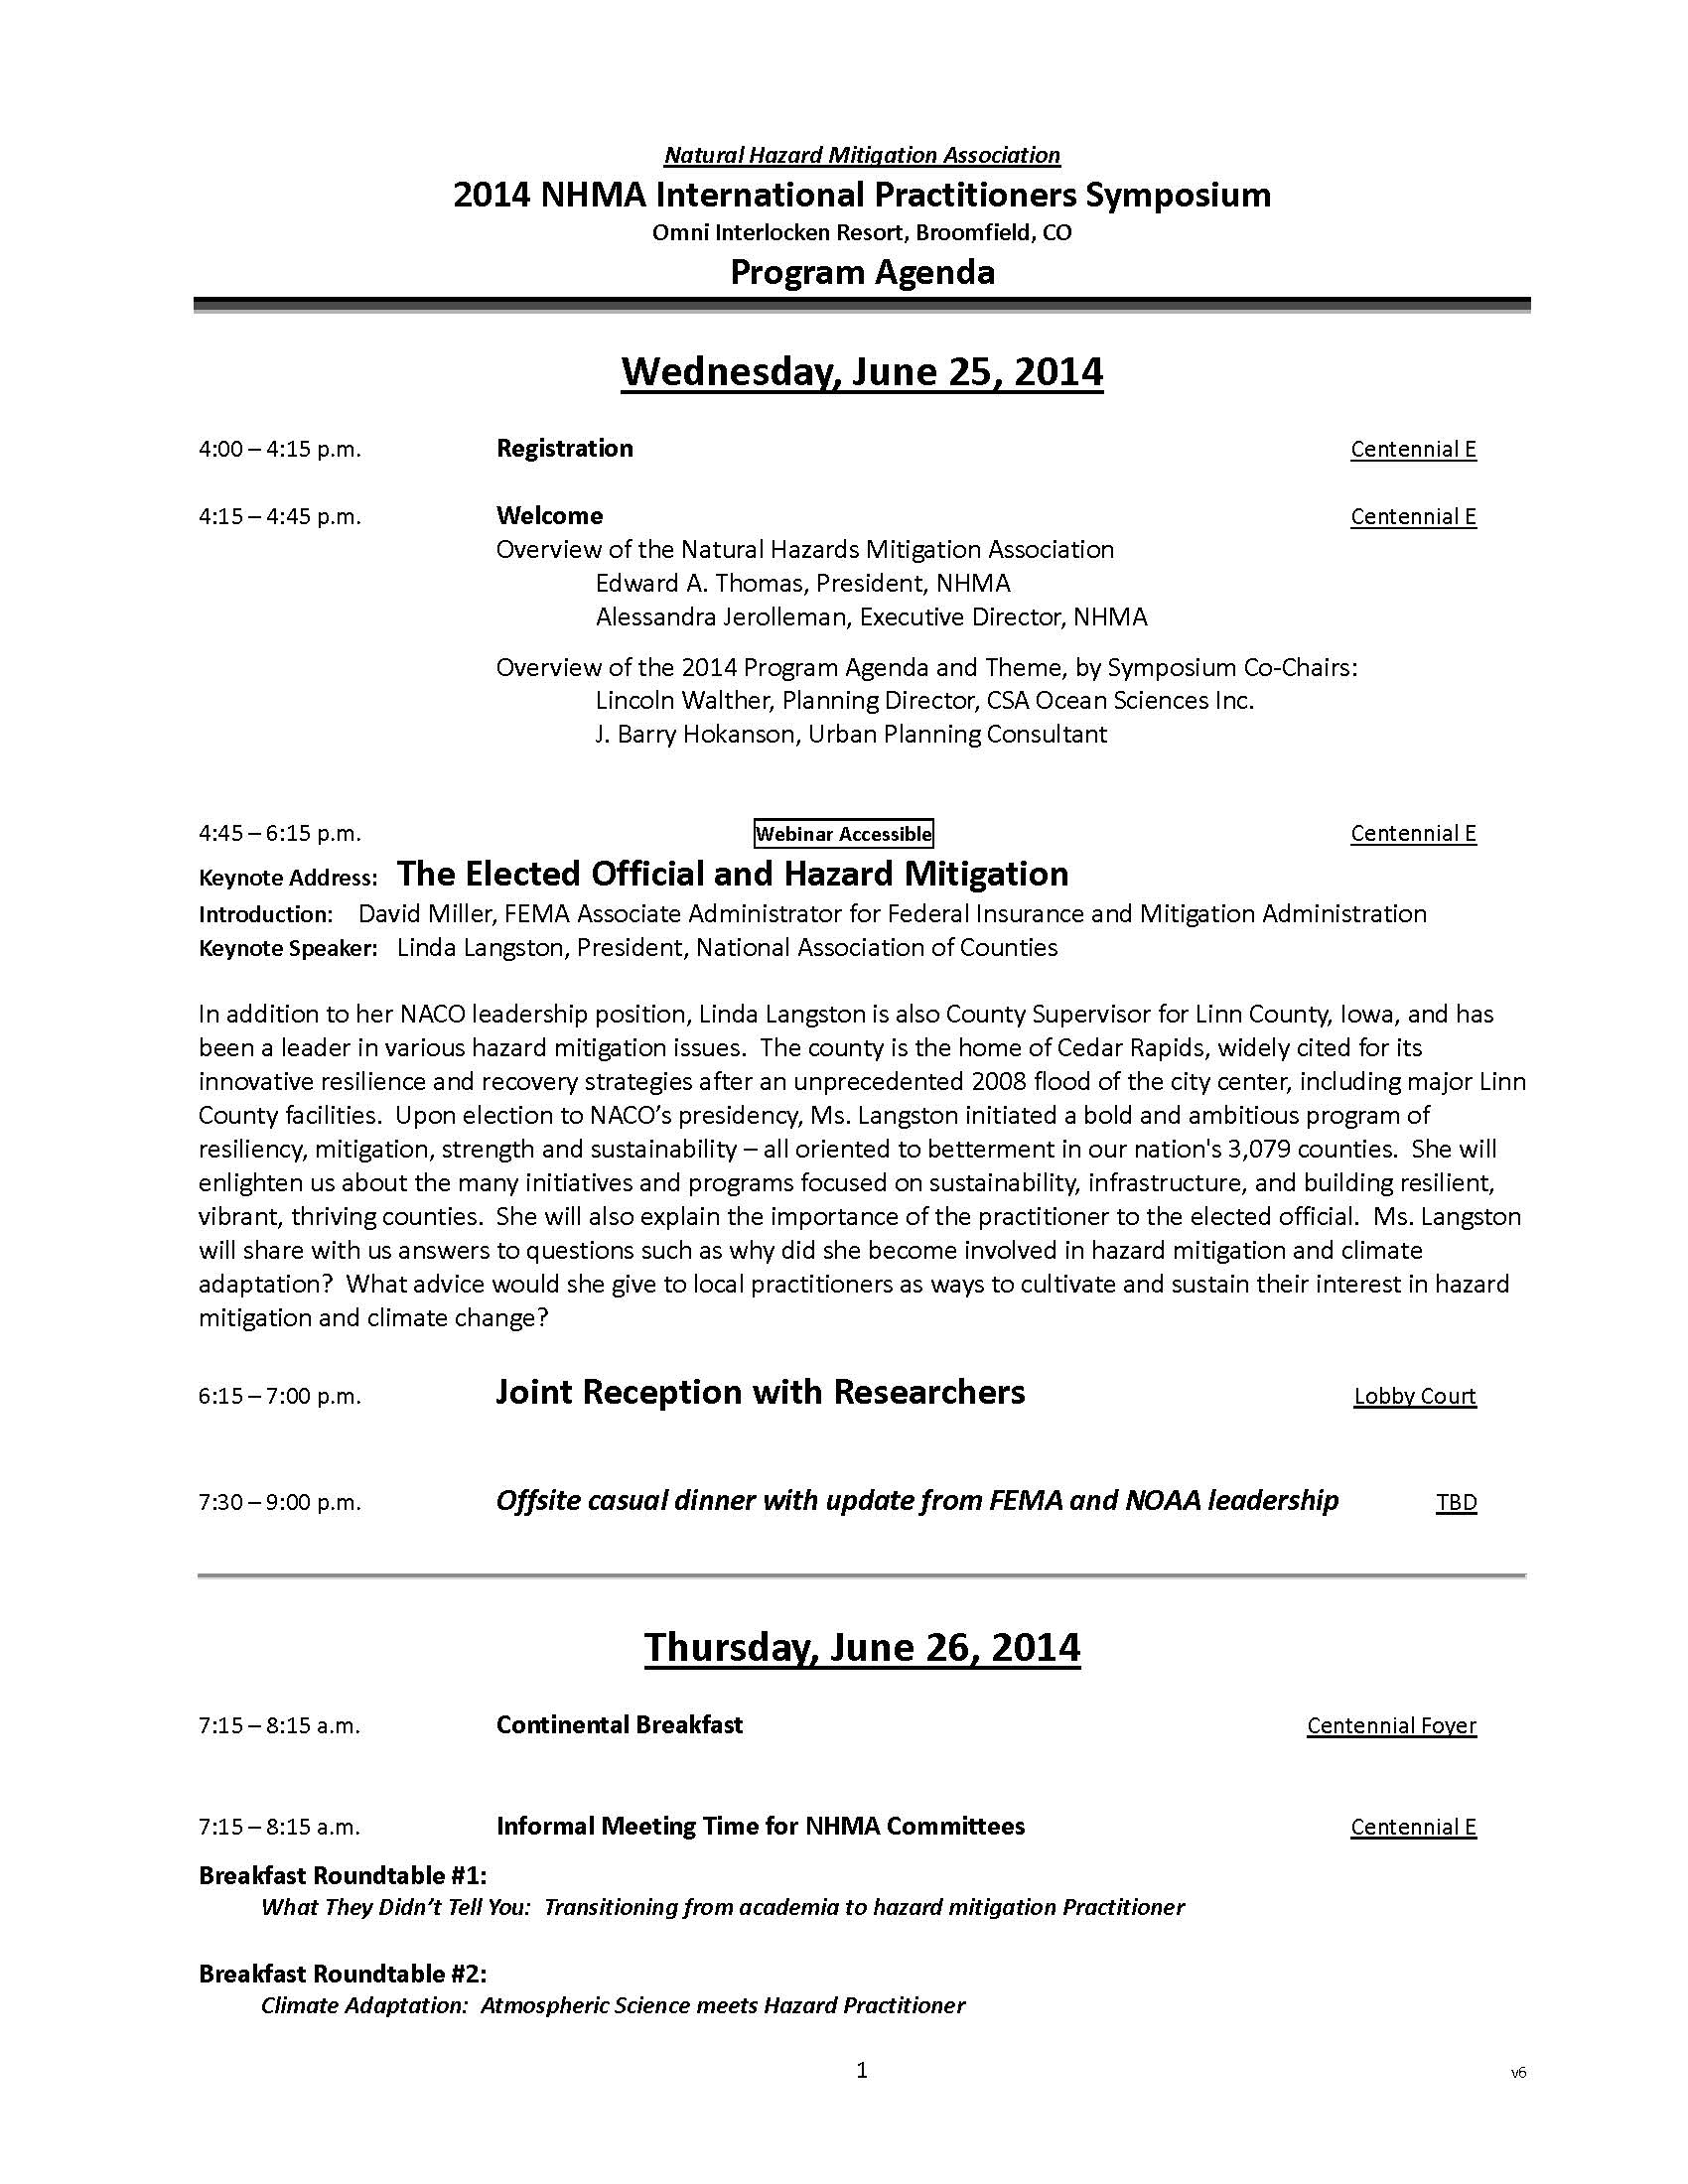 Program Agenda NHMA 2014 Symposium 5-26-14 v6_Page_1